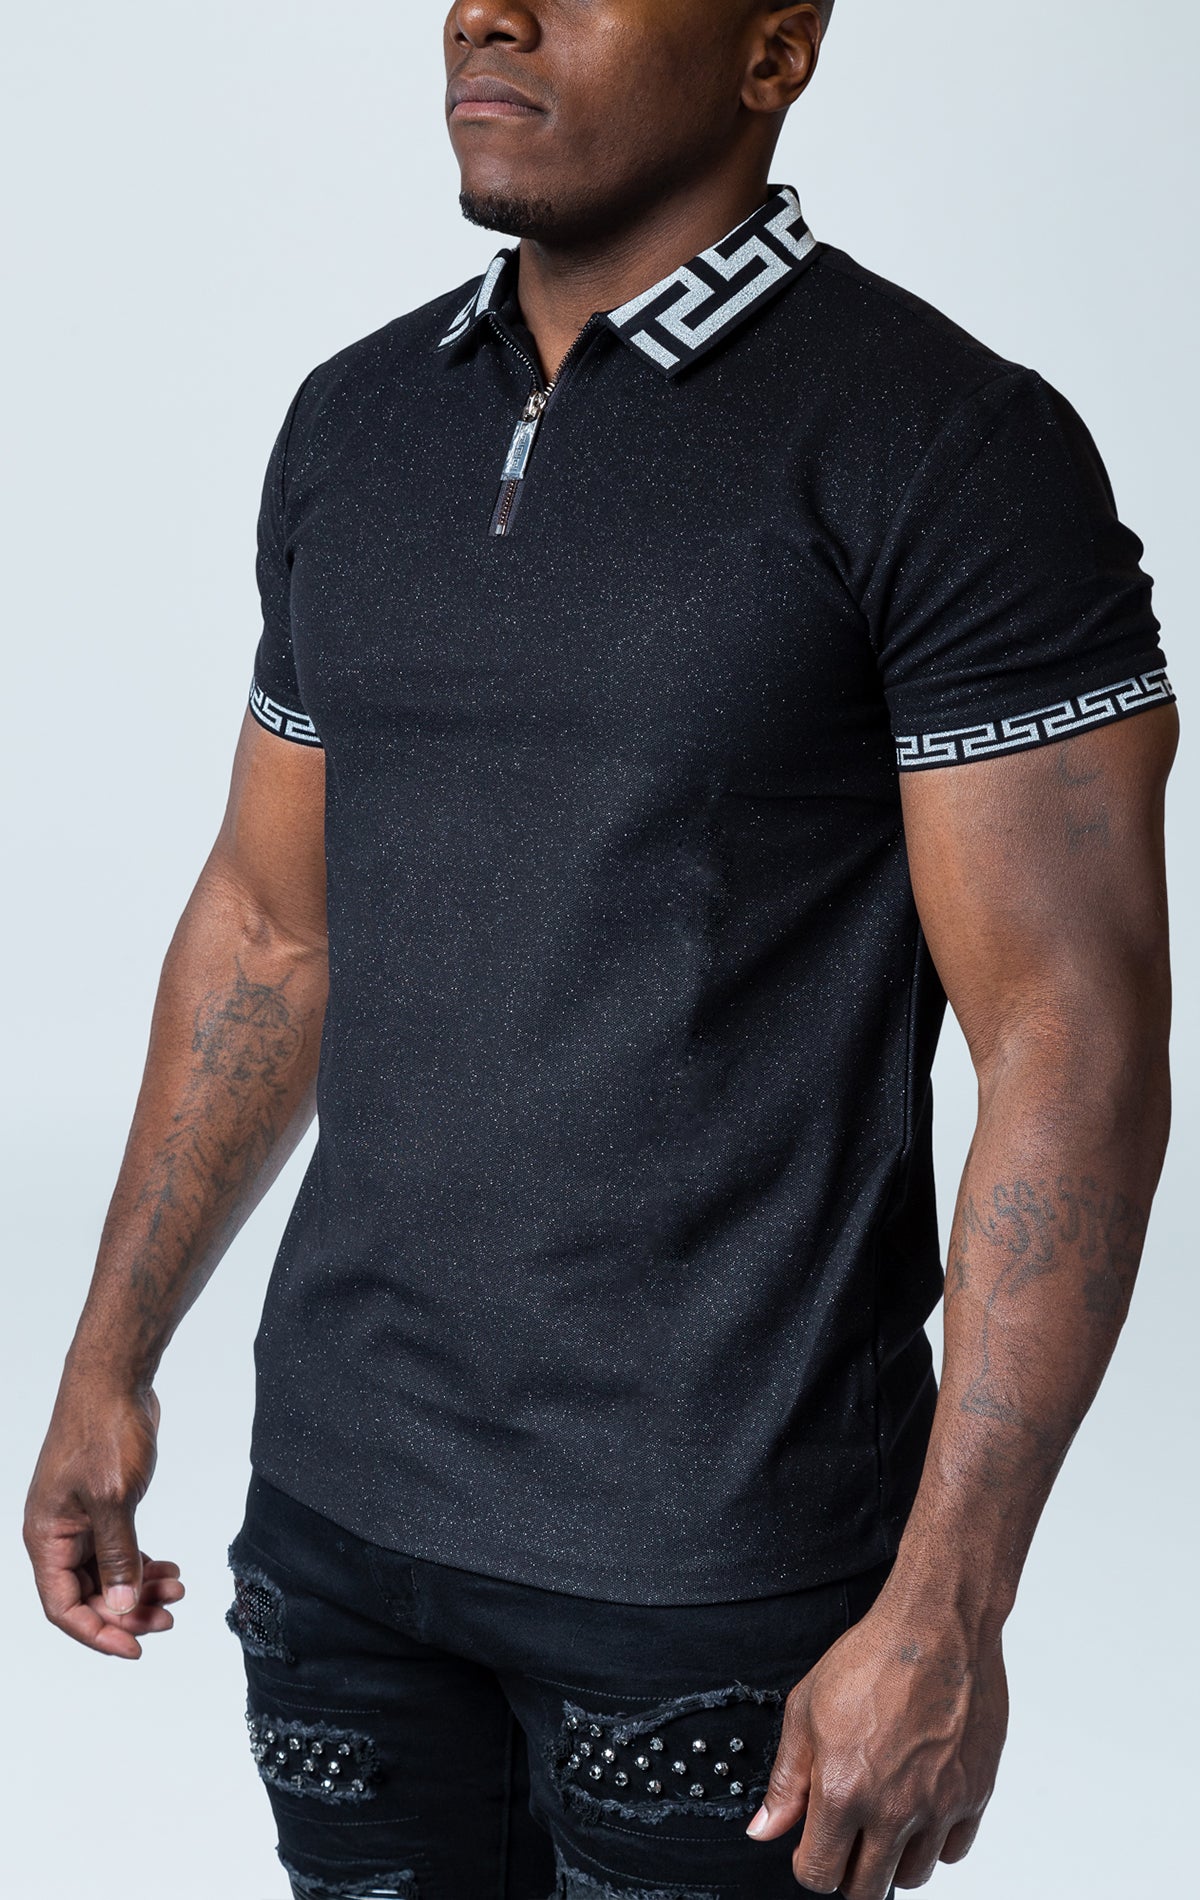 Black glitter short sleeve polo shirt with unique collar design